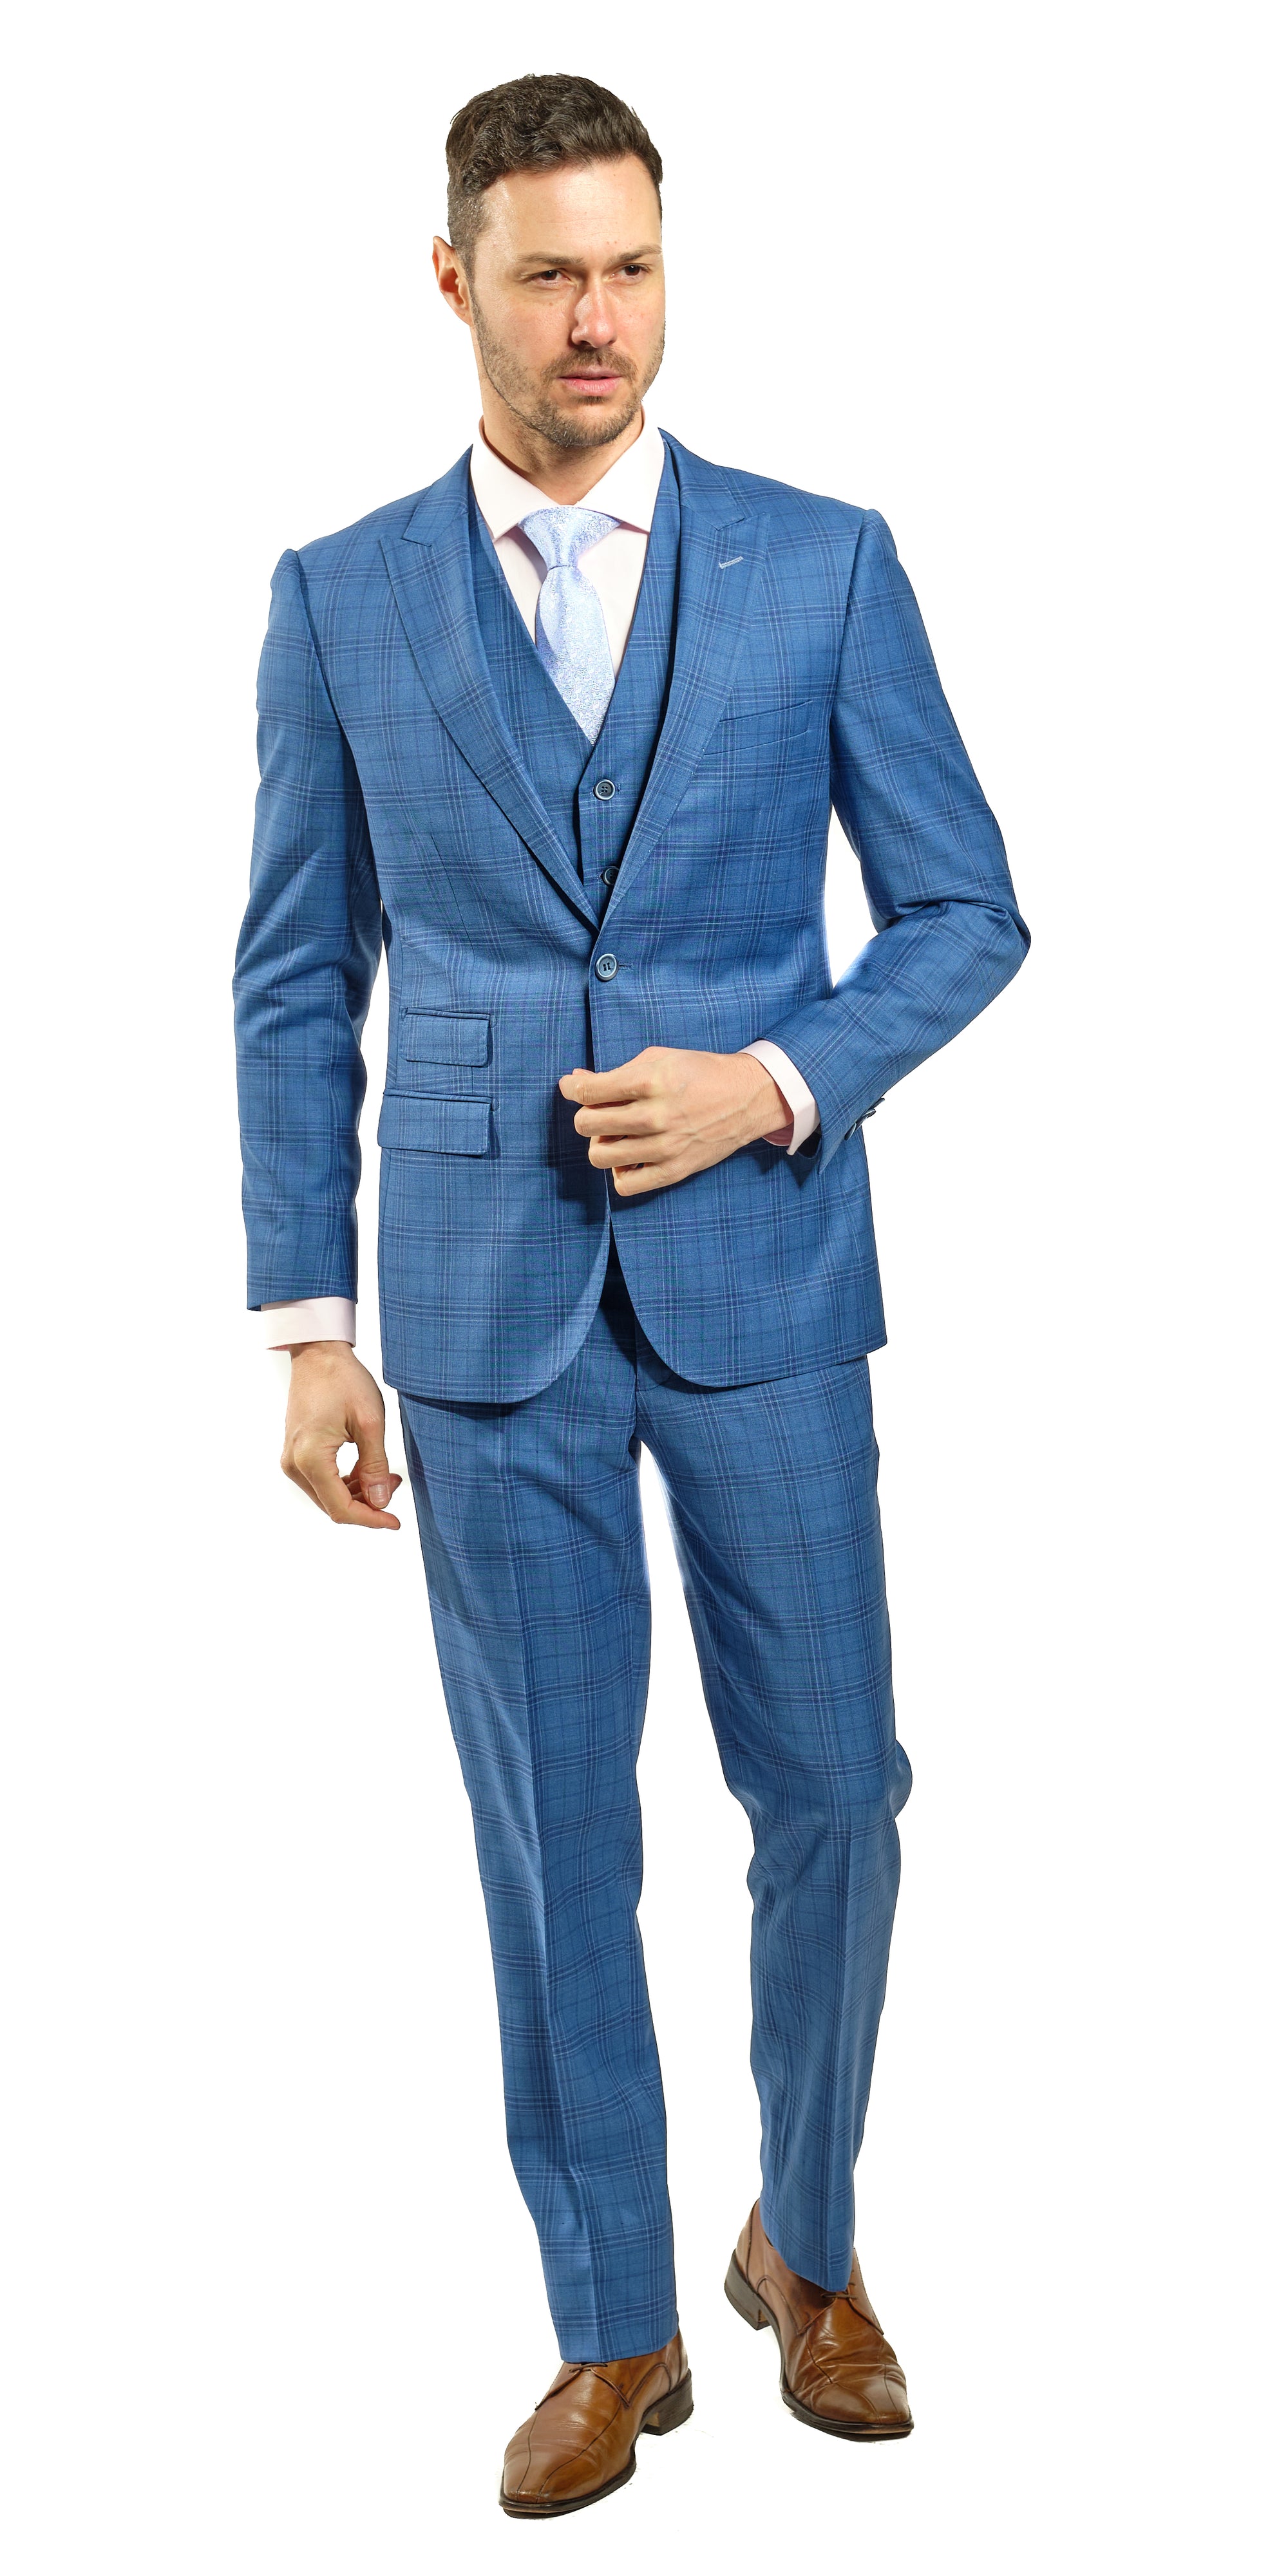 Blue on Blue Check 3-Piece Suit-The Suit Spot-Wedding Suits-Wedding Tuxedos-Groomsmen Suits-Groomsmen Tuxedos-Slim Fit Suits-Slim Fit Tuxedos-Online wedding suits